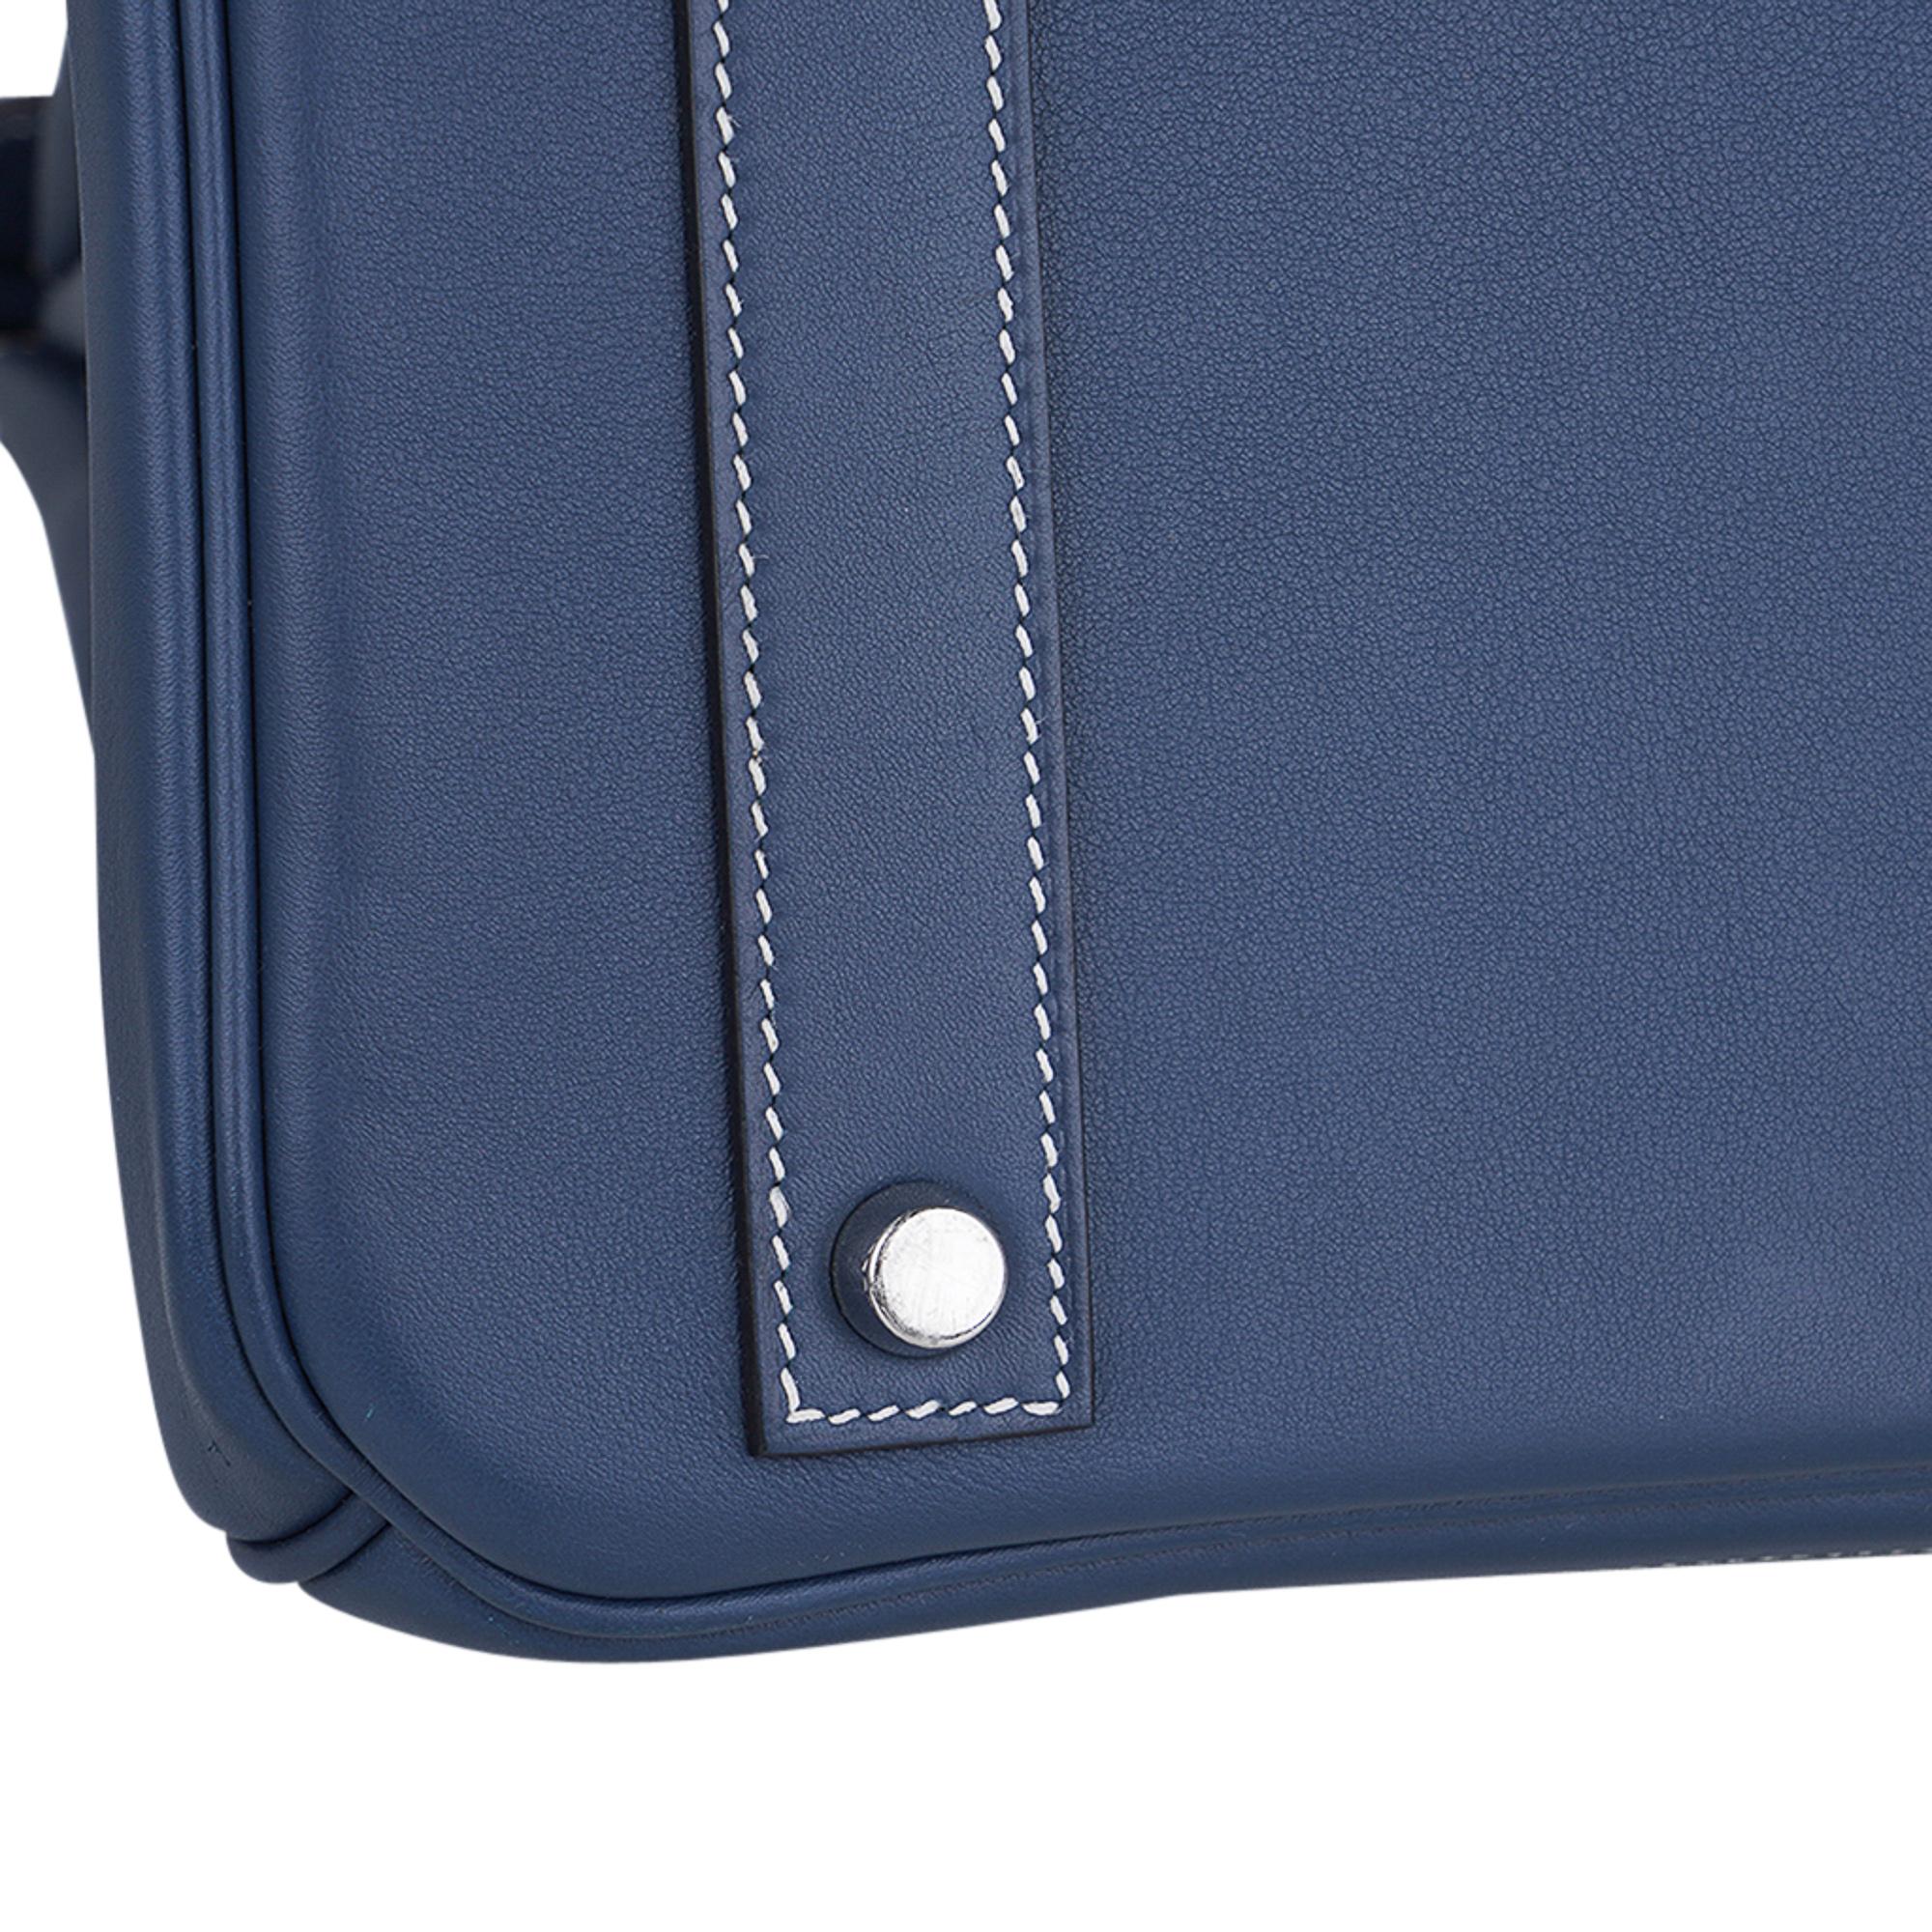 Hermes Birkin 40 Ghillies Blue de Prusse w/ Blue Toile Bag Limited Edition For Sale 9